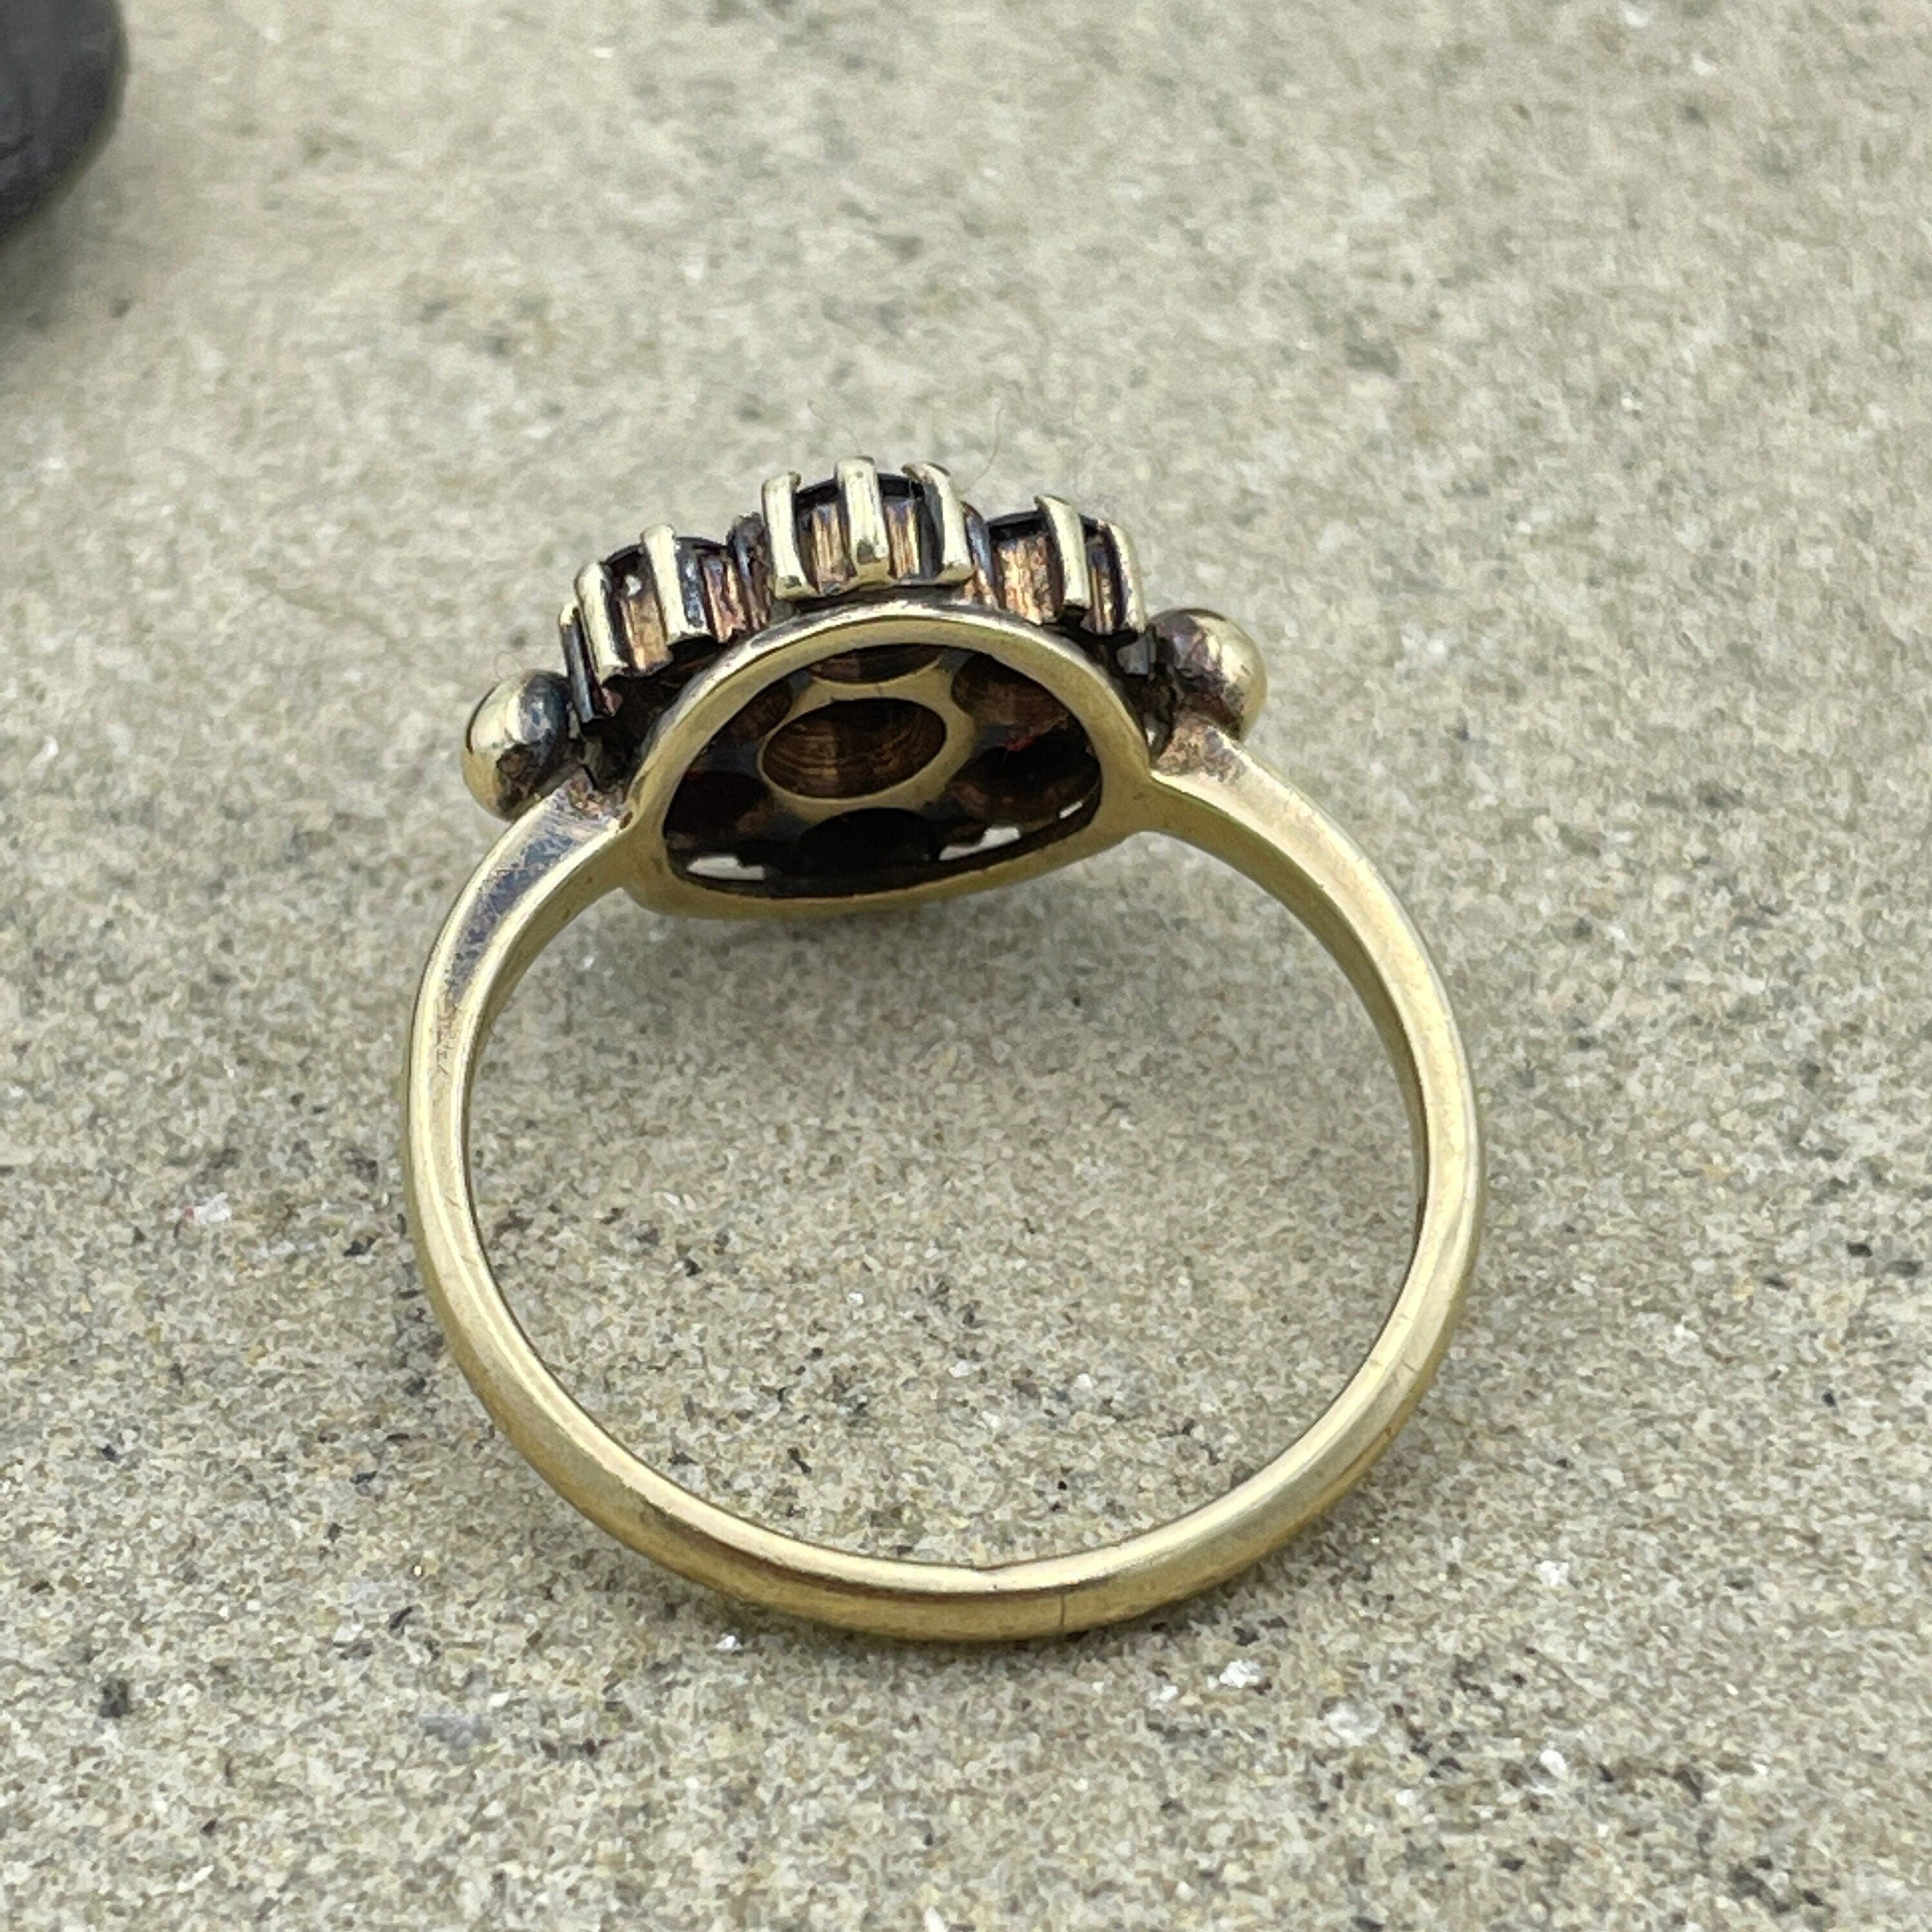 Vintage 1950s 9ct gold garnet cluster ring, hallmarked 1959